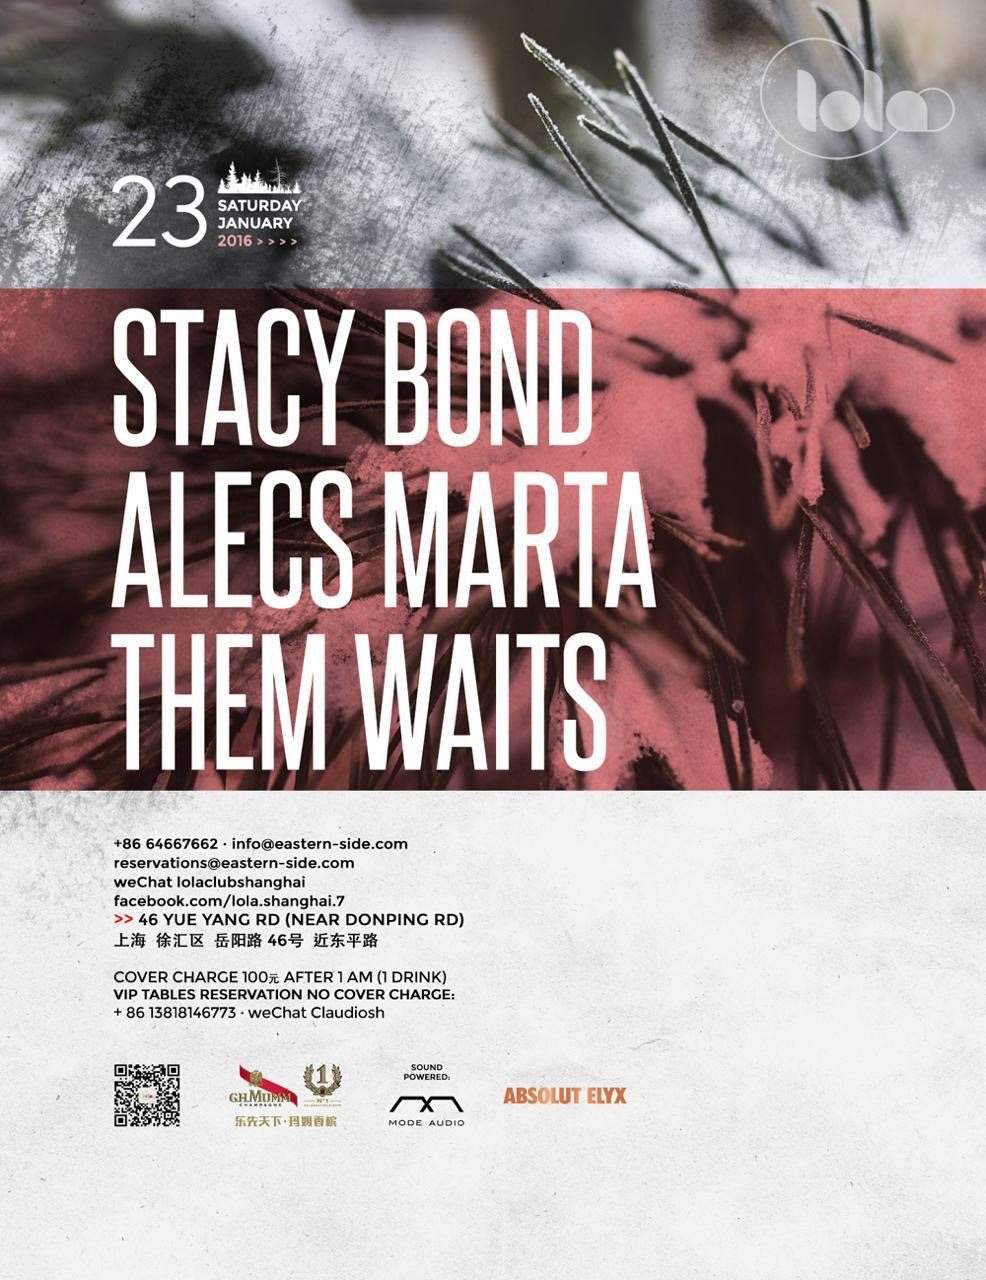 Them Waits, Alecs Marta & Stacy Bond - フライヤー表